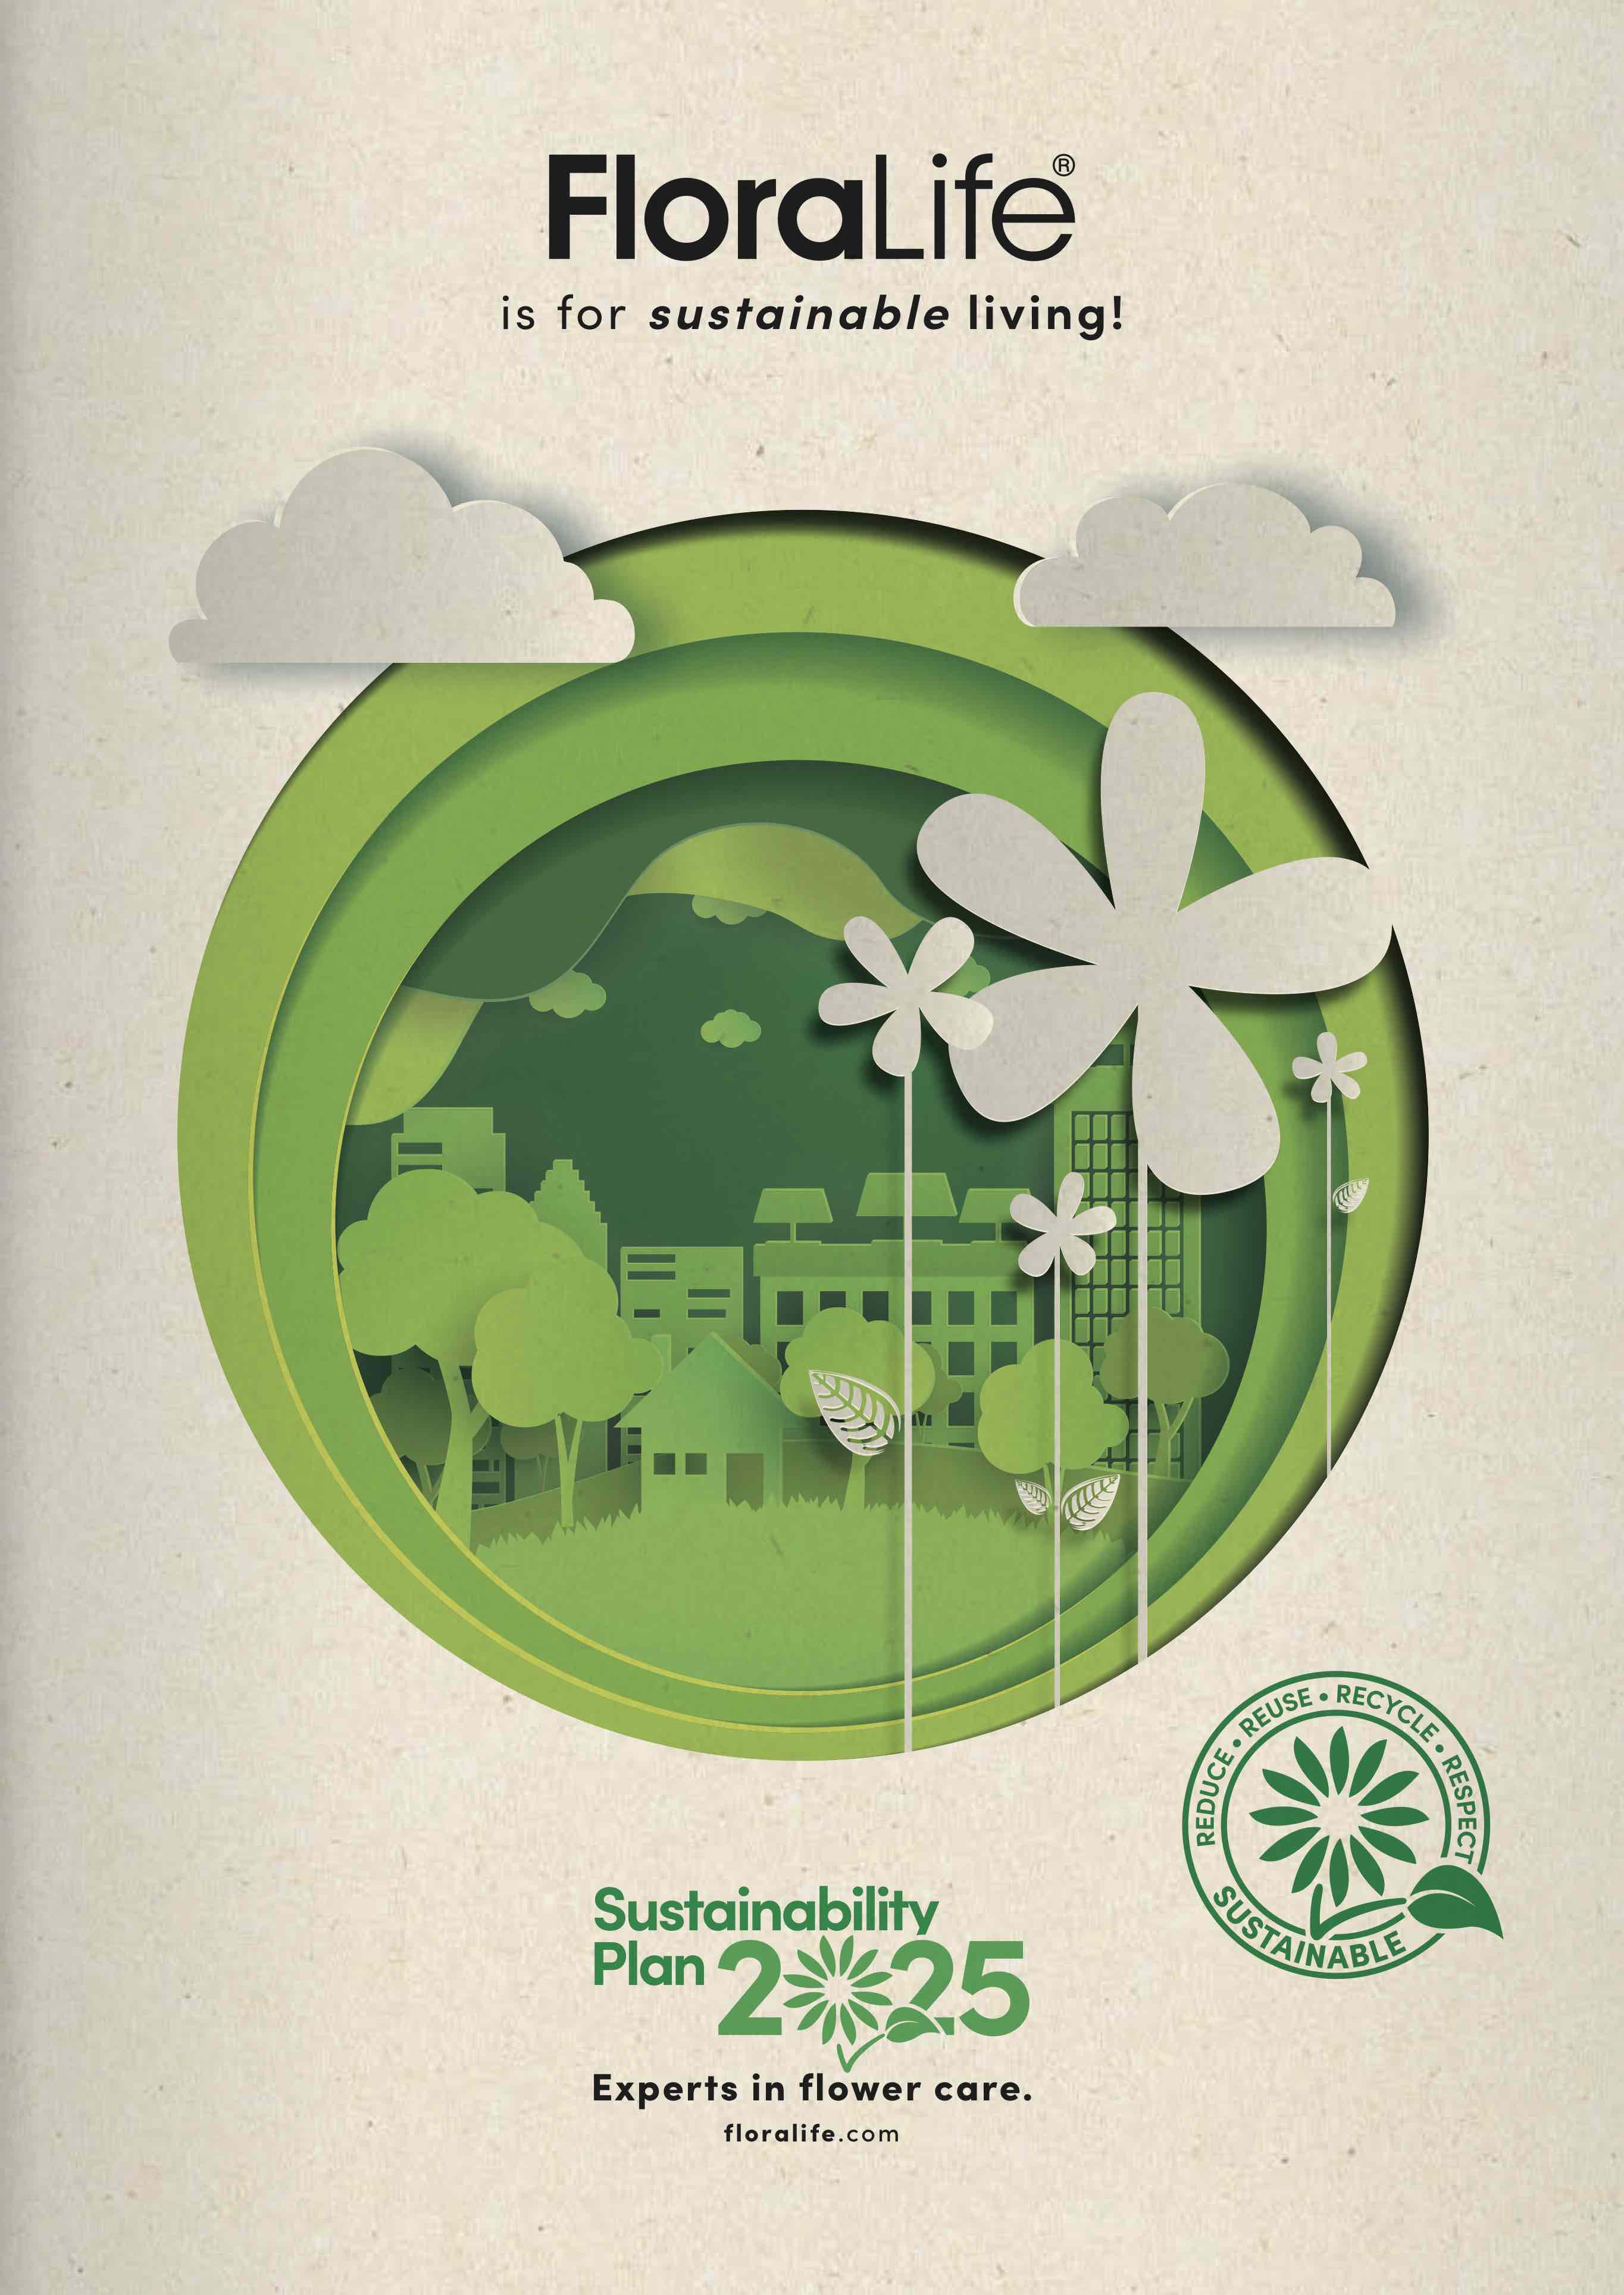 Floralife launches 2025 sustainability initiative